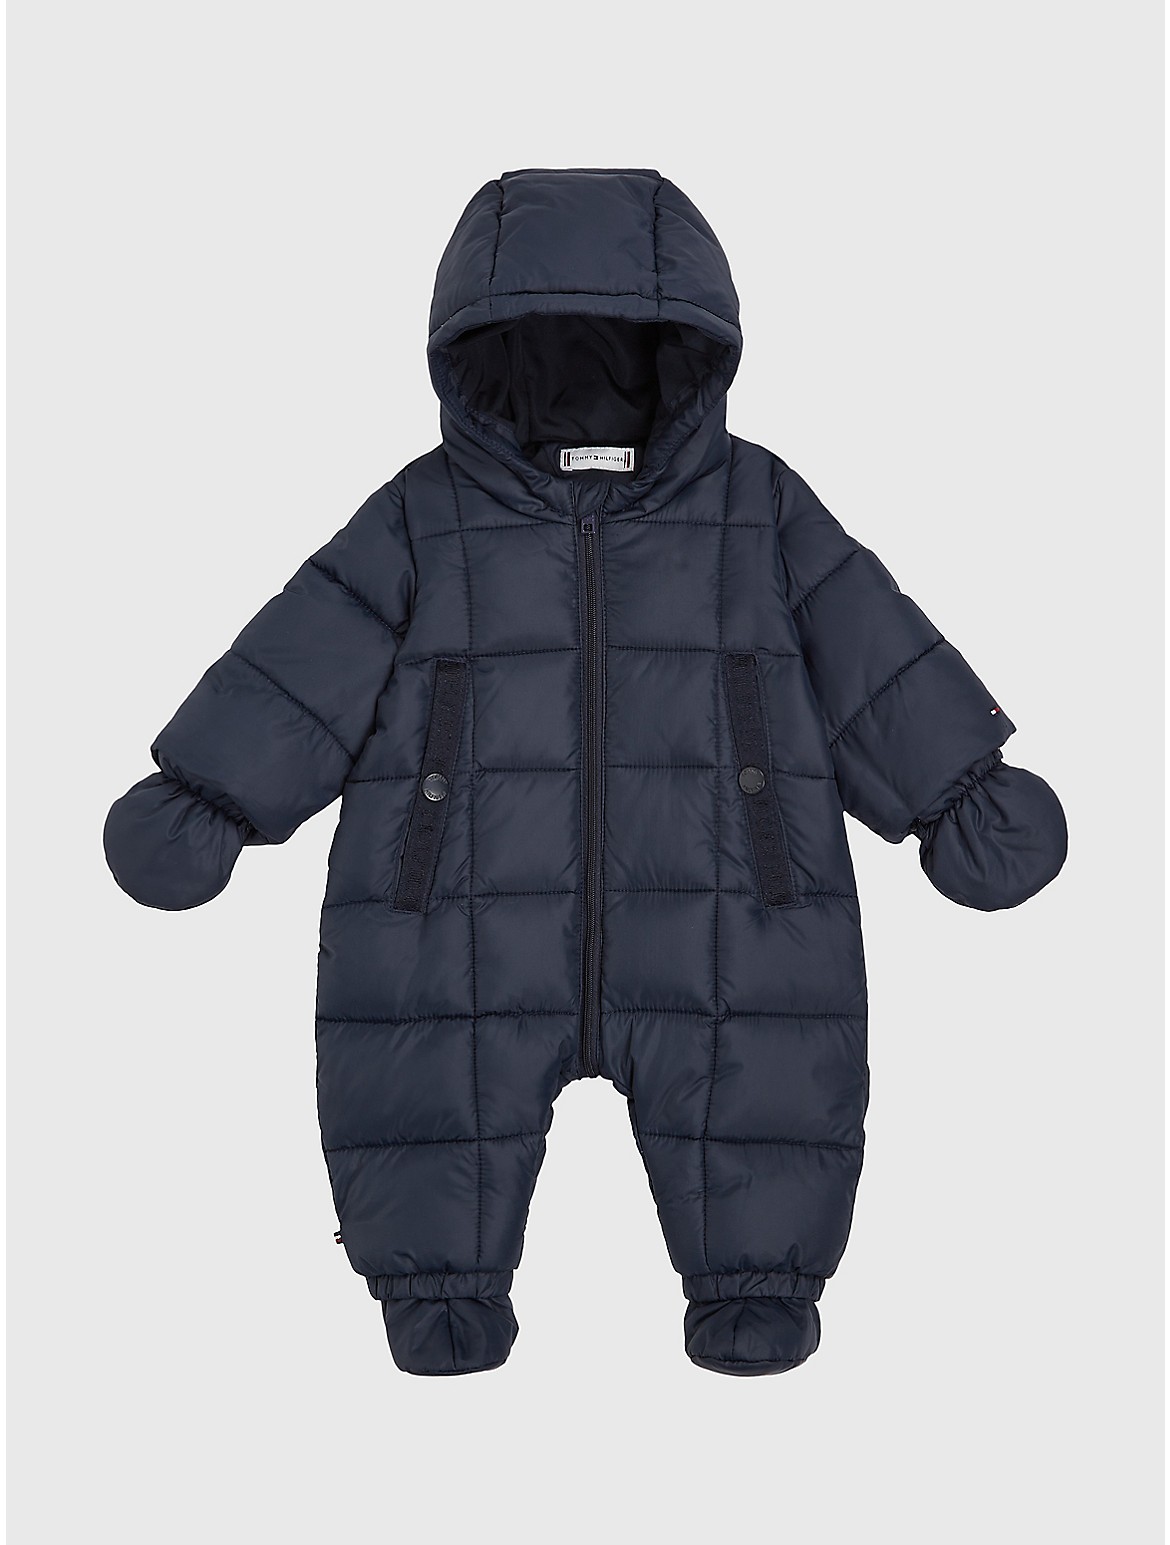 Tommy Hilfiger Babies' Ski Suit Set - Blue - 9M